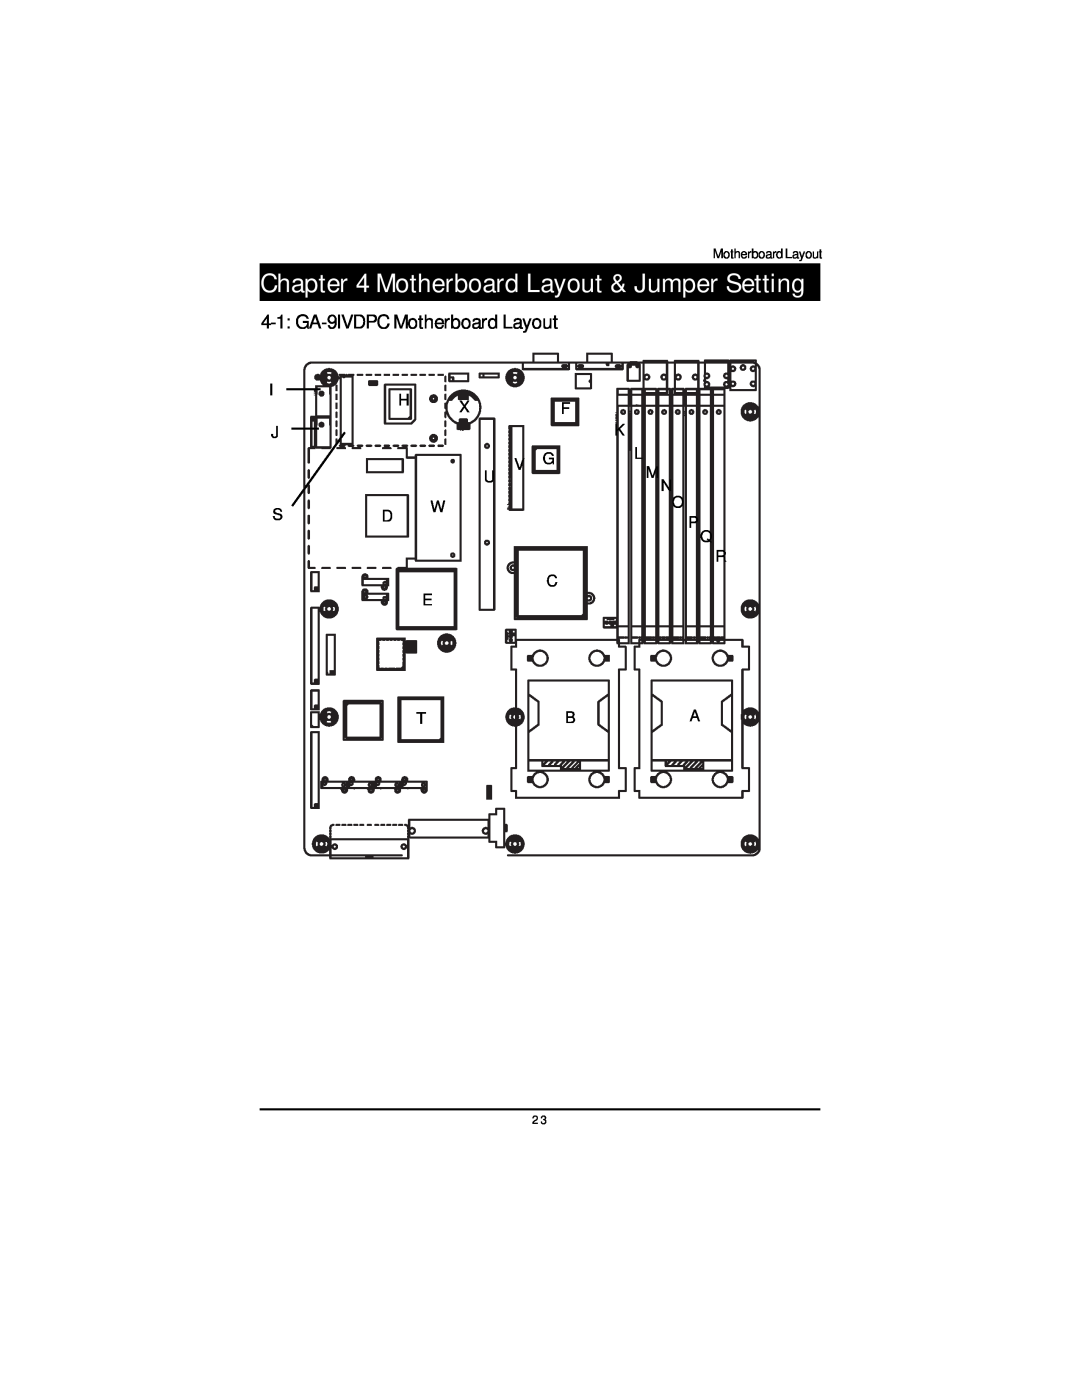 Intel GS-SR195V manual Motherboard Layout & Jumper Setting, 4-1 GA-9IVDPC Motherboard Layout 